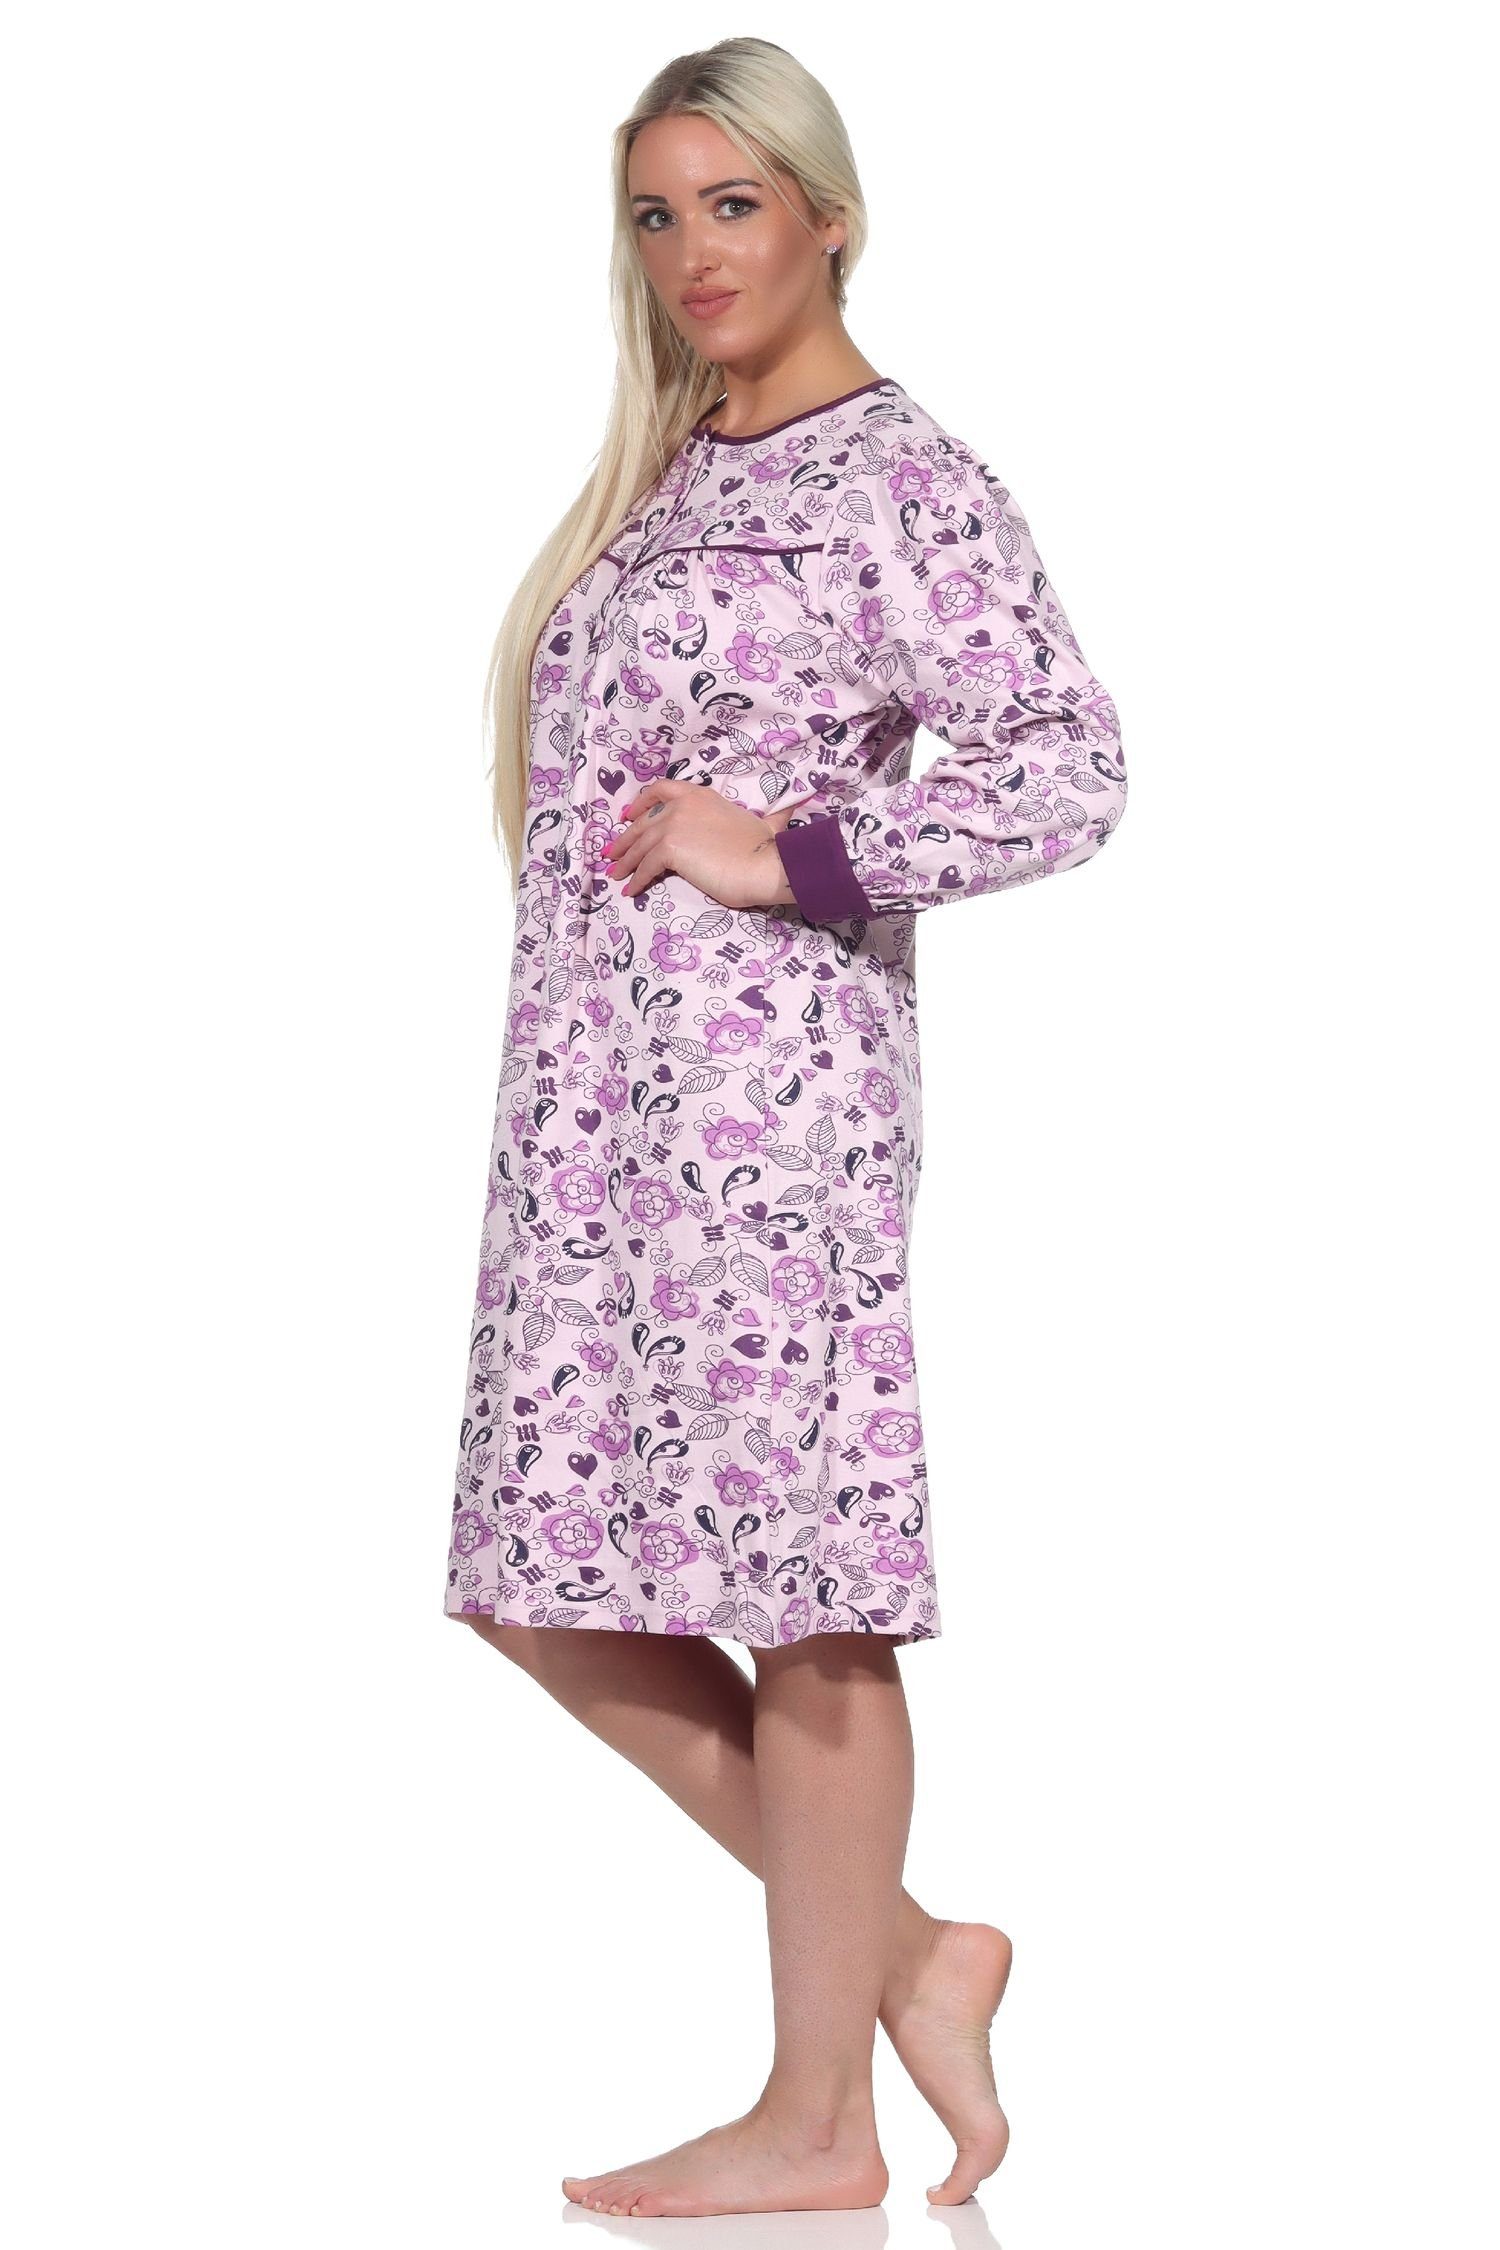 Normann Nachthemd Edles Damen Nachthemd Interlock-Qualität langarm Kuschel in rosa